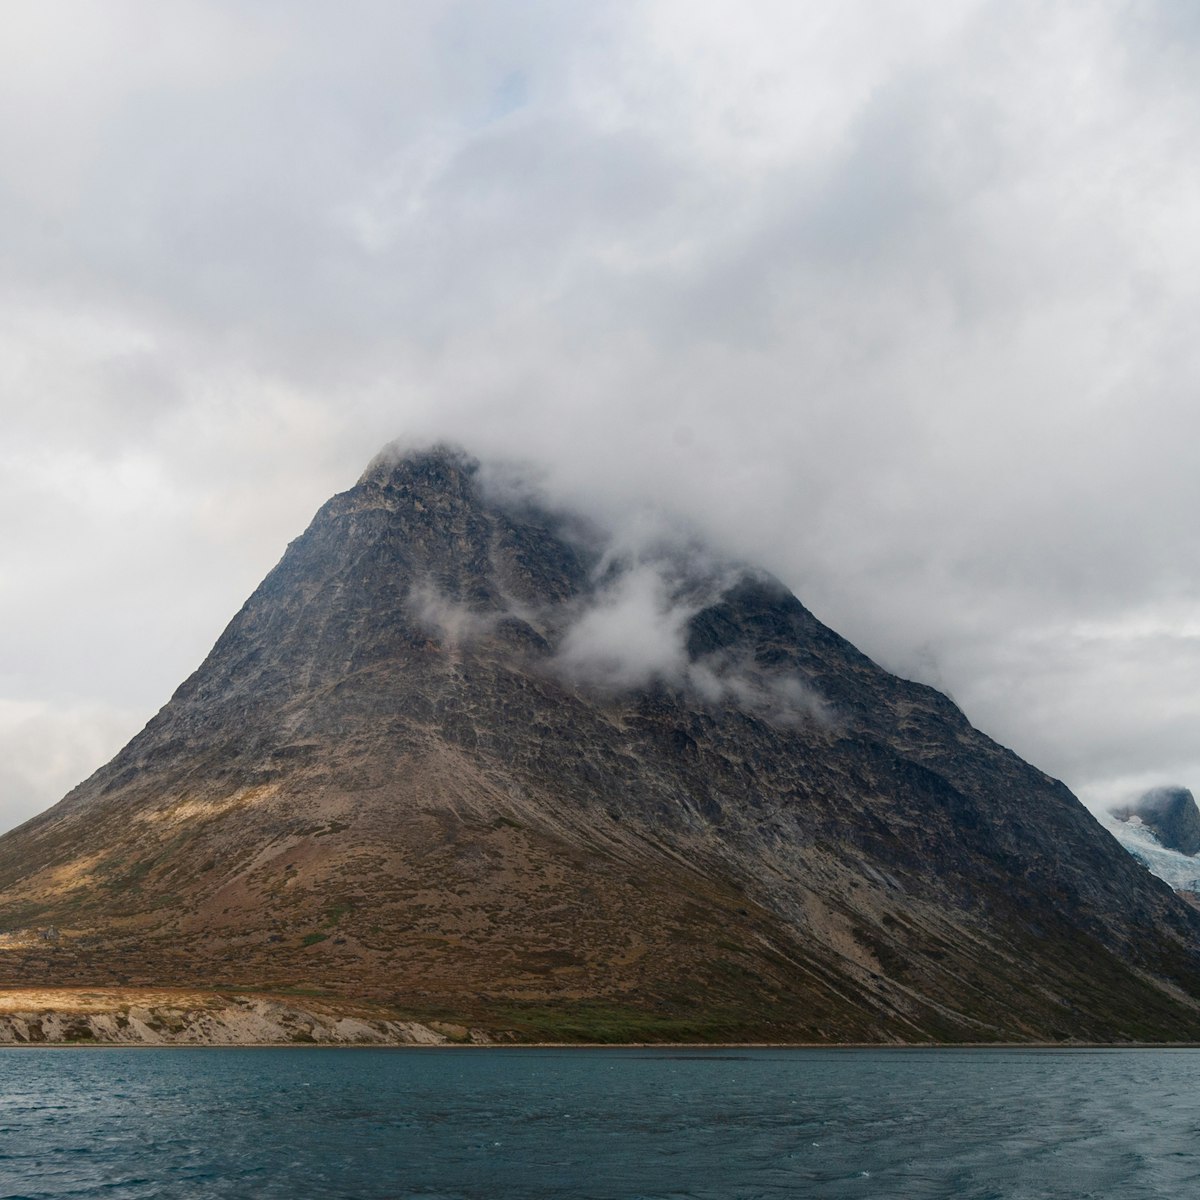 Mountain next to the glacier of the tasermiut fjord
1288495767